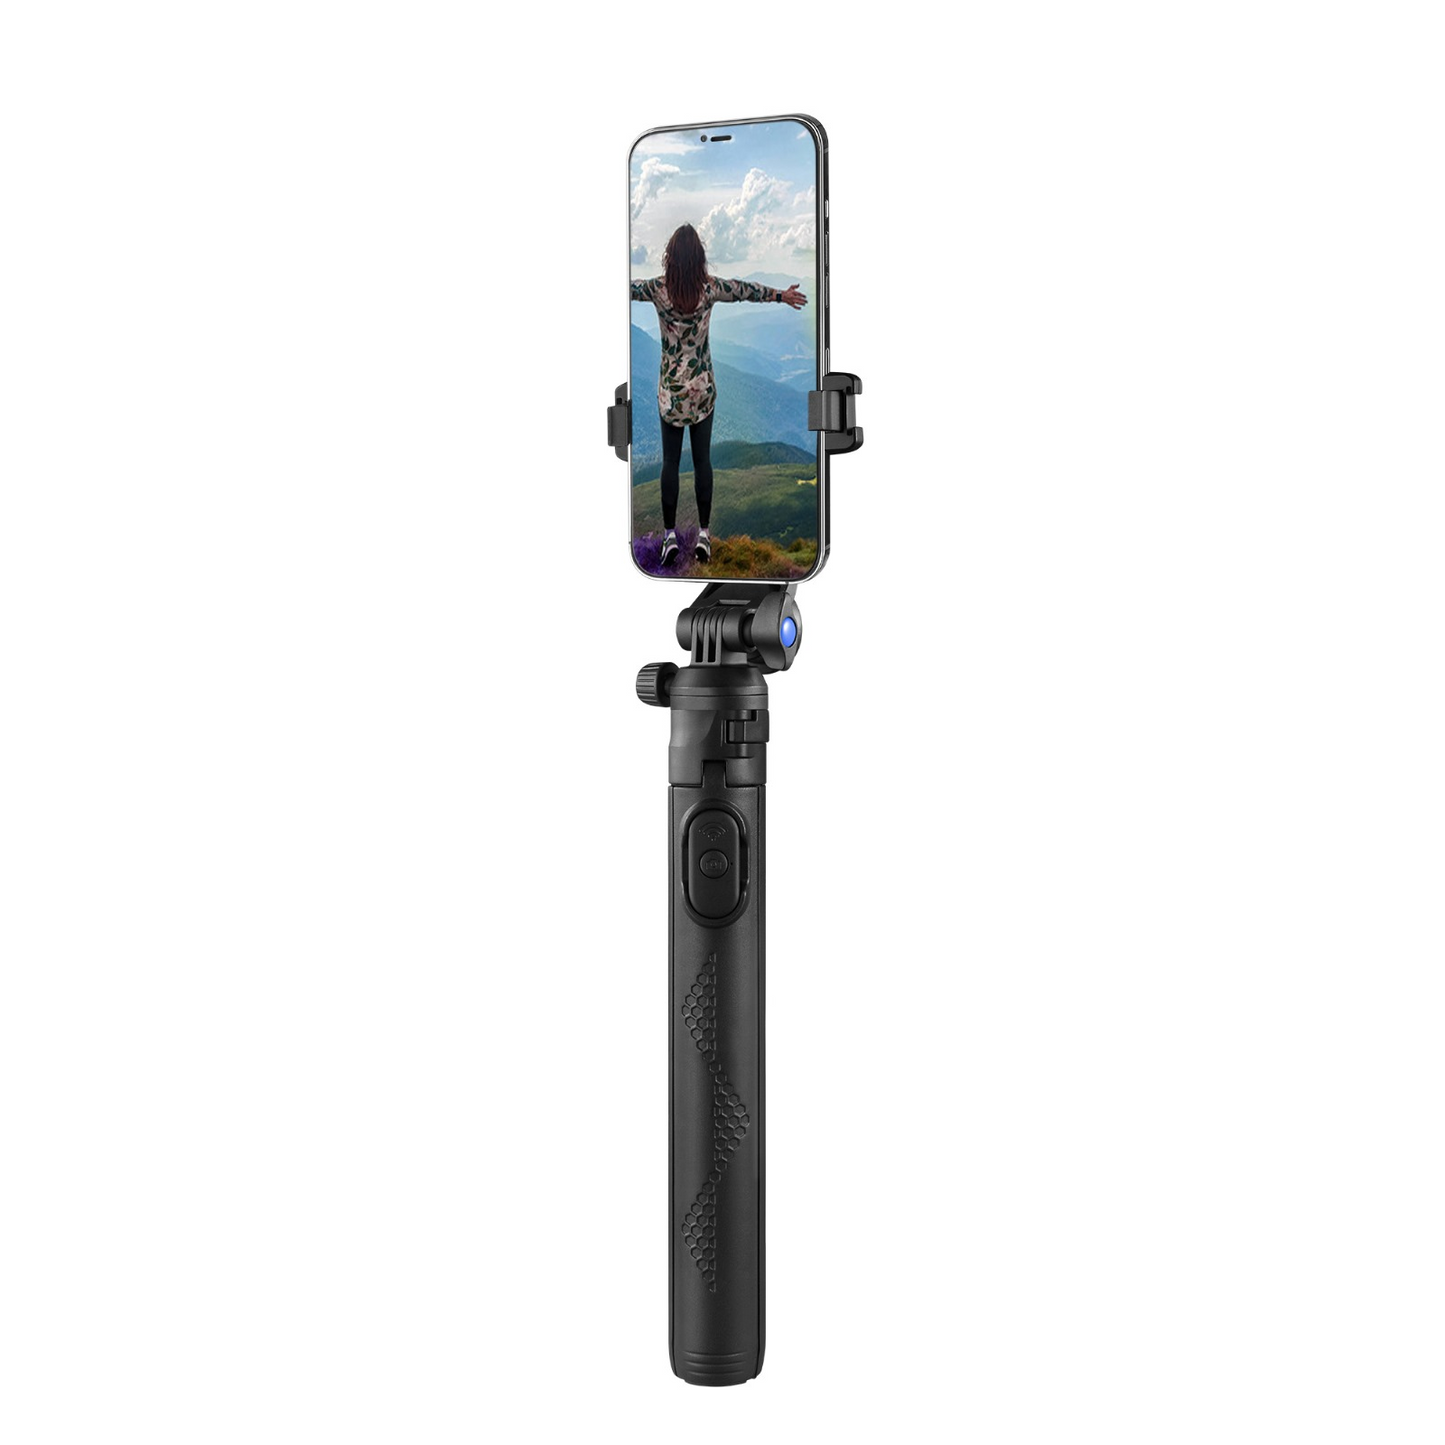 Samurai Tripod Dual Pod Mini Selfie Stand/Pocket-sized Table Tripod with Bluetooth Remote